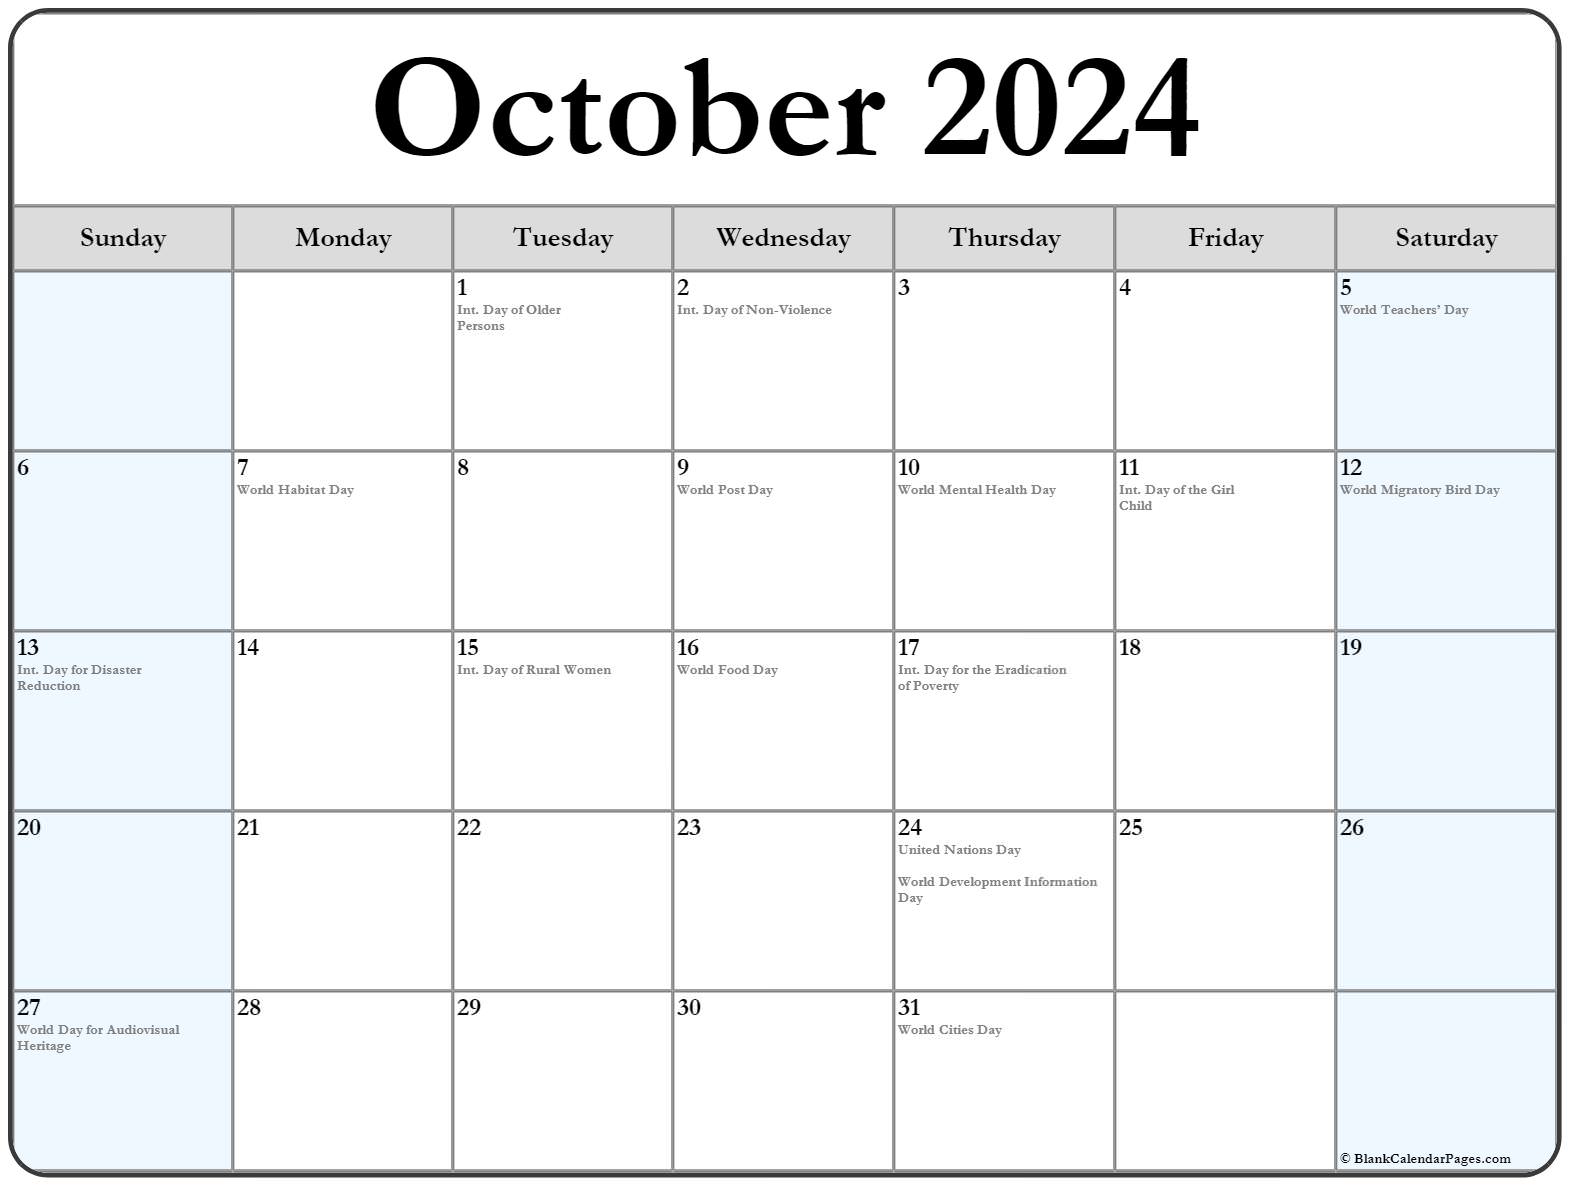 October 2020 calendar with holidays